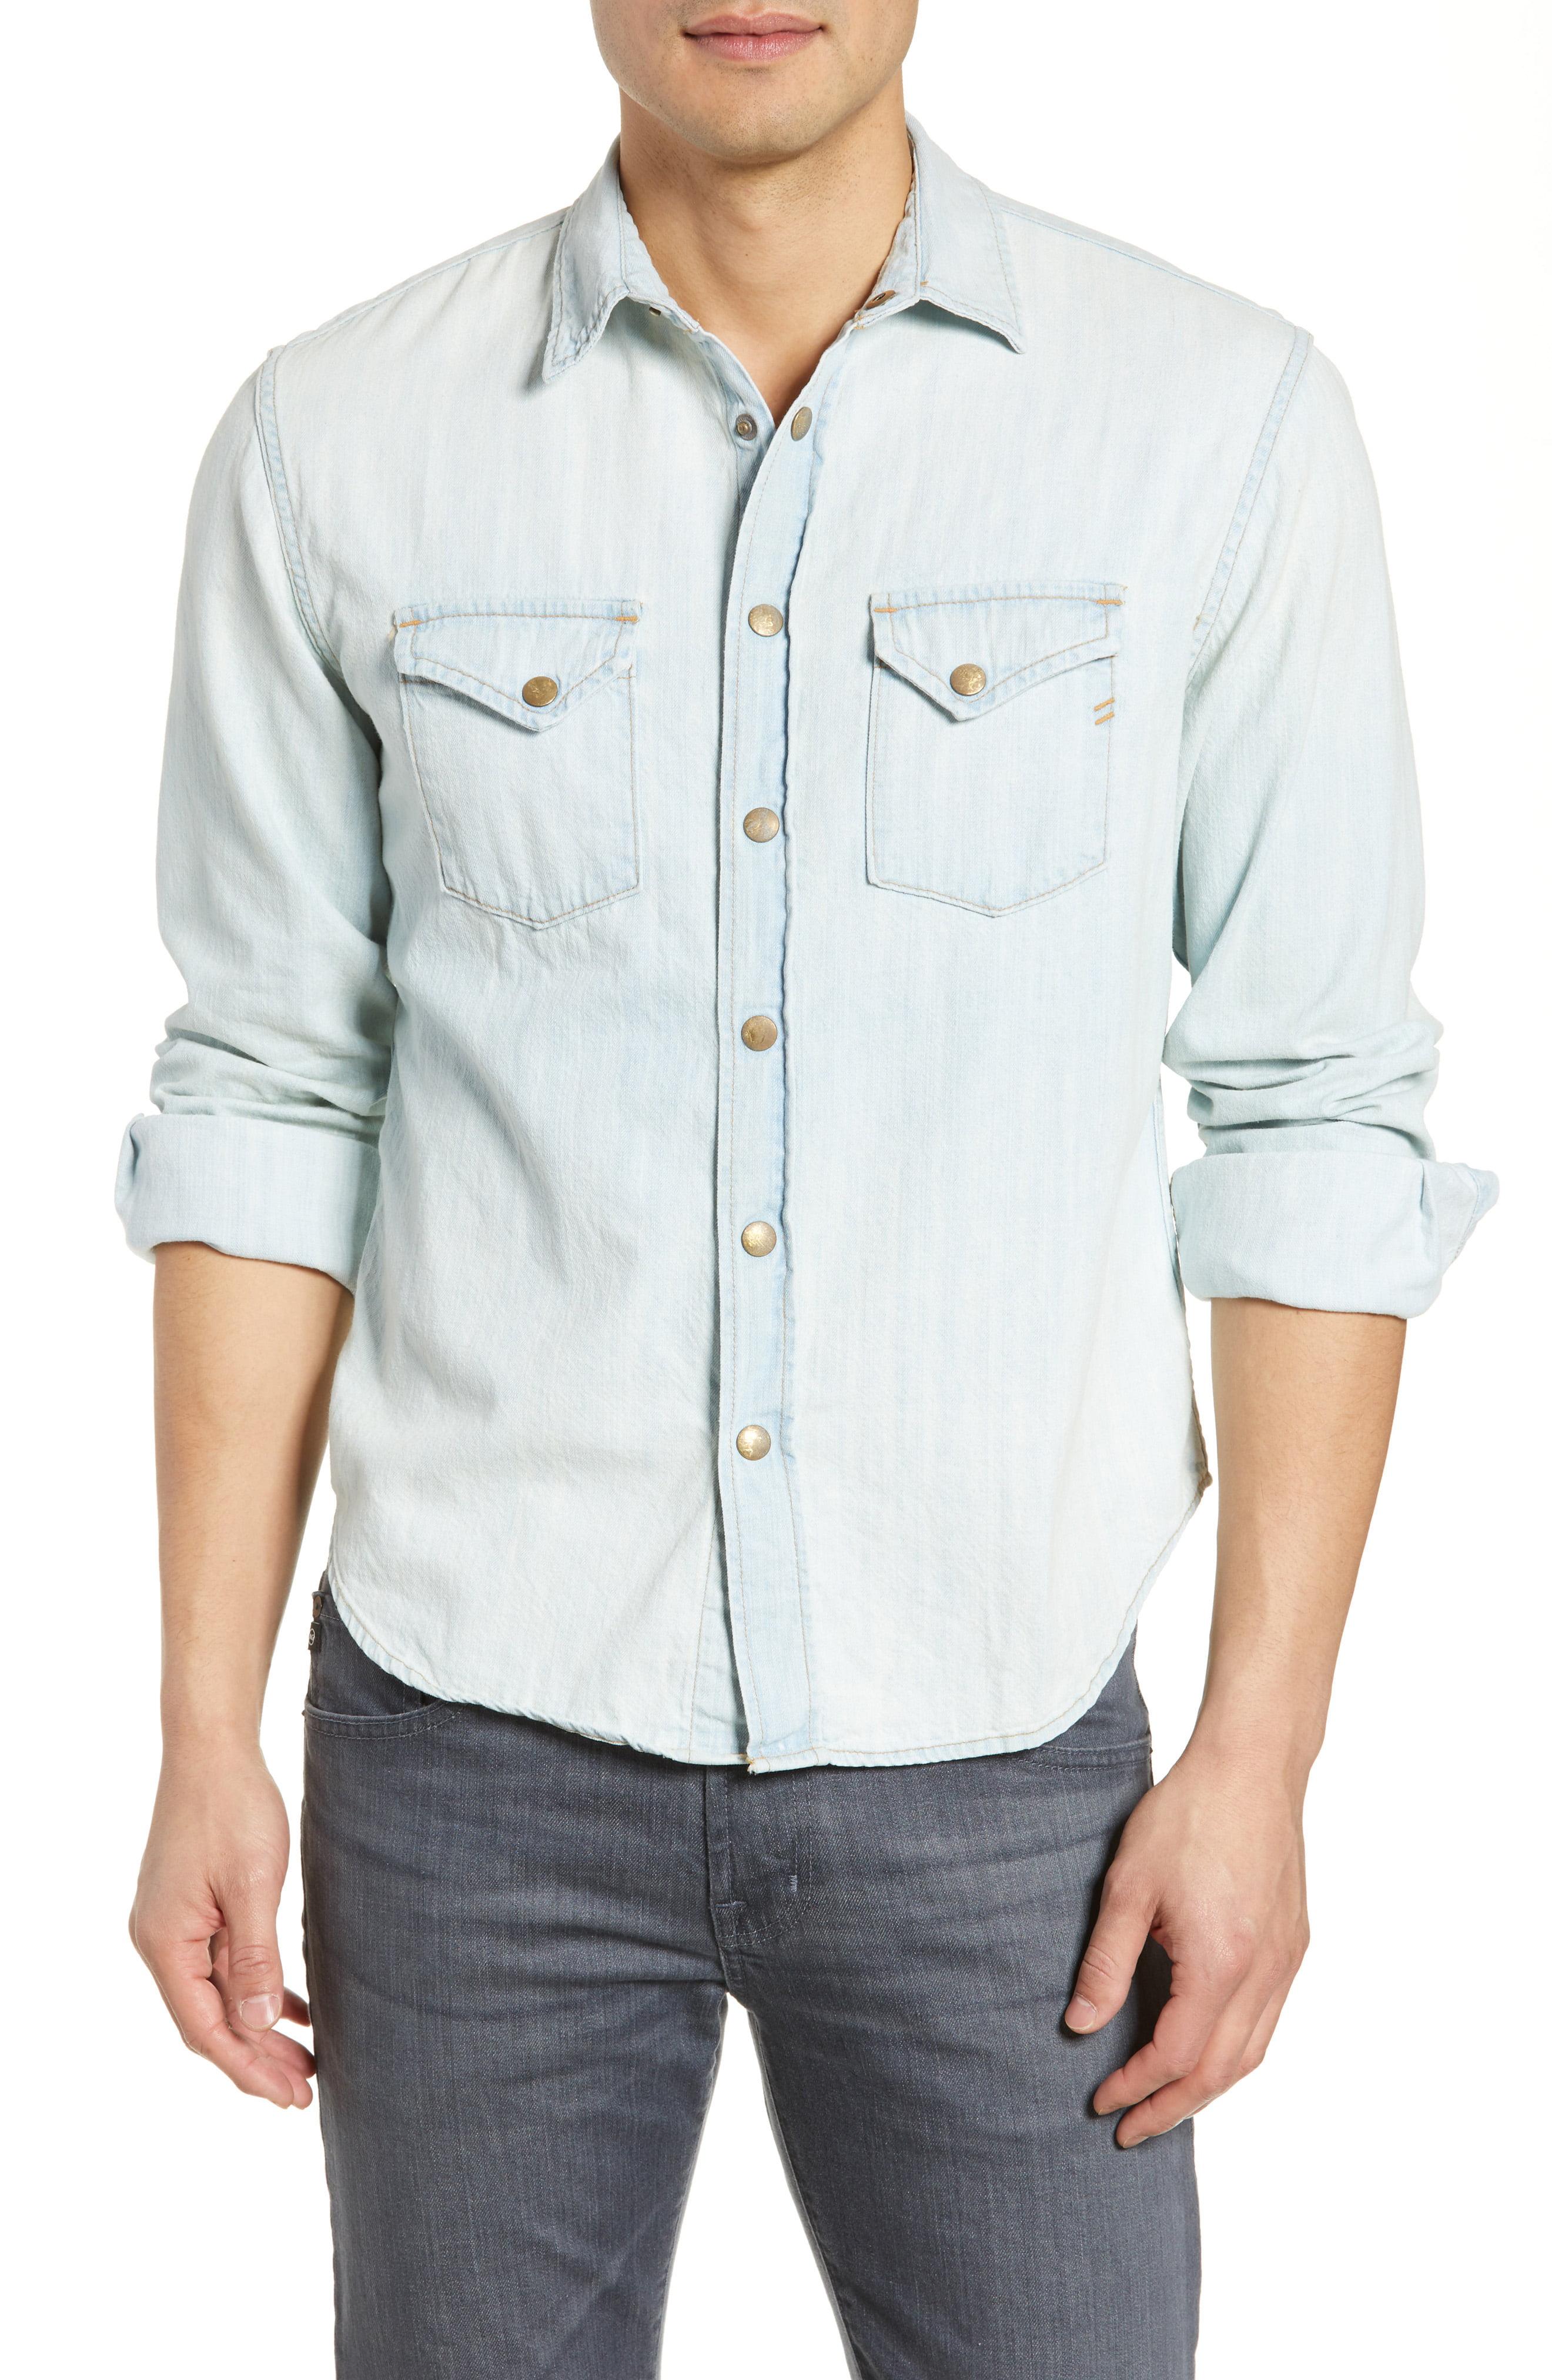 Lyst - Billy Reid Distressed Denim Western Shirt in Blue for Men